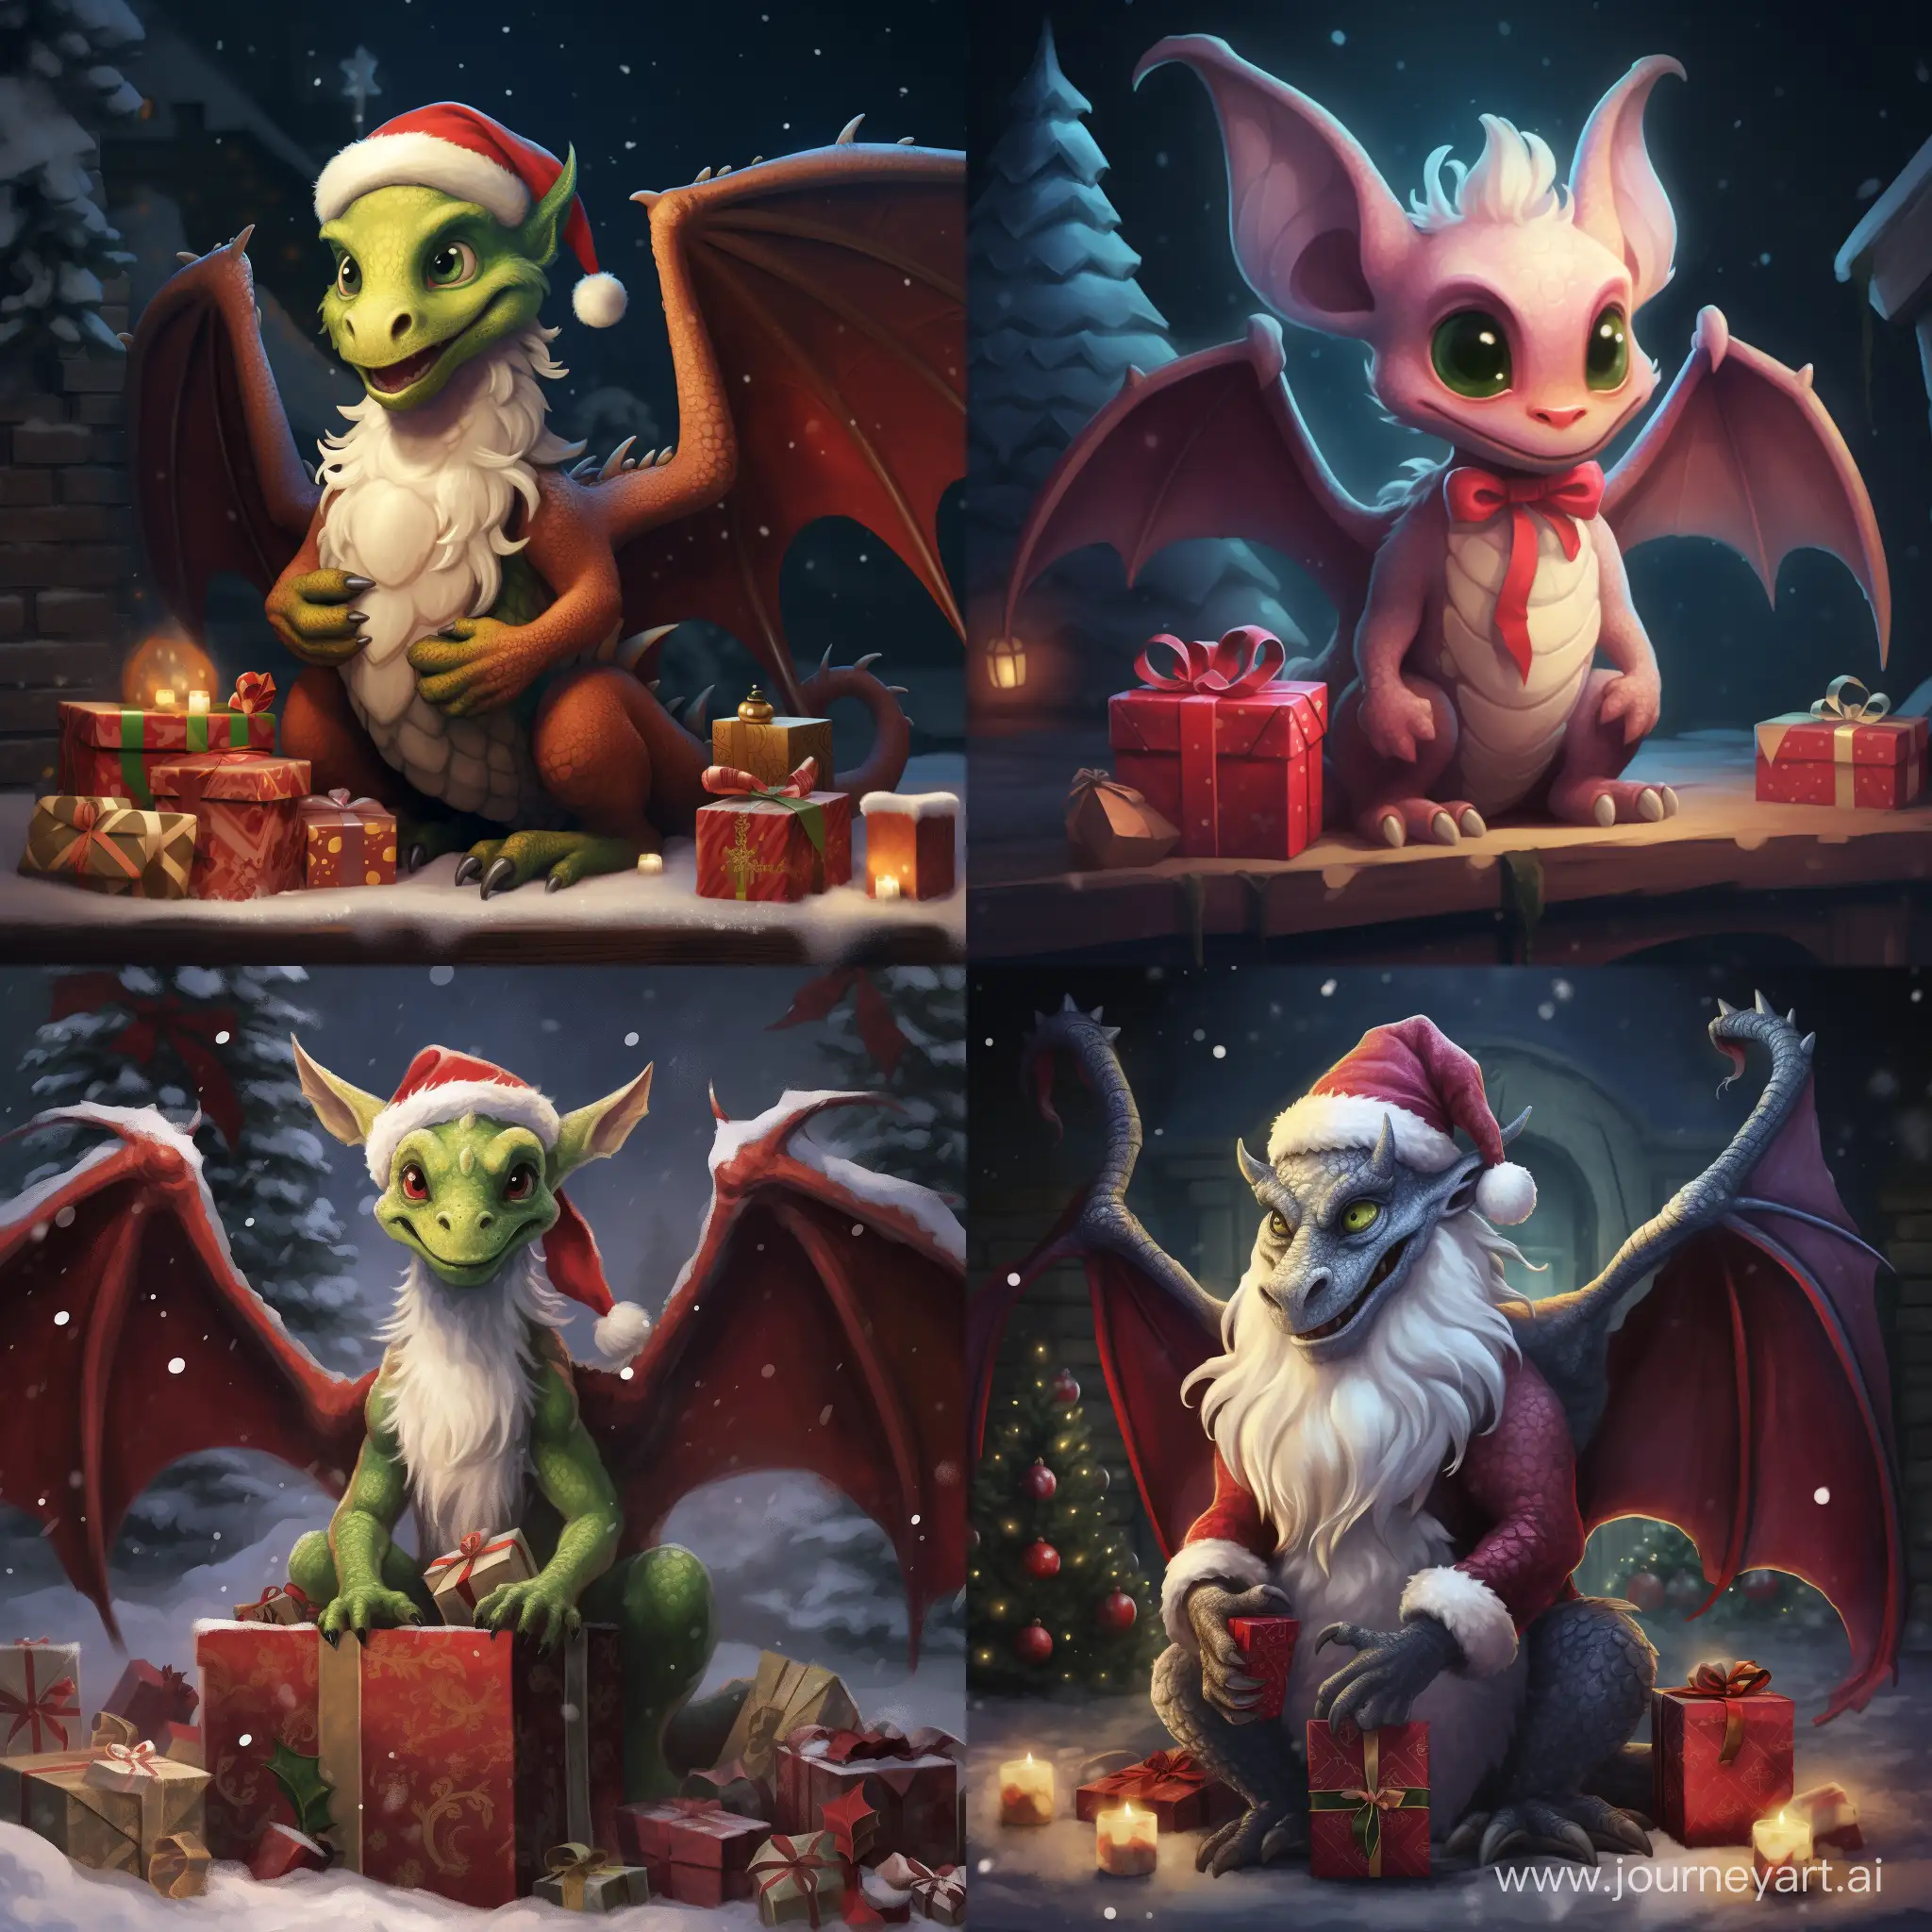 Joyful-Dragon-Spreading-Christmas-Cheer-in-a-Festive-Atmosphere